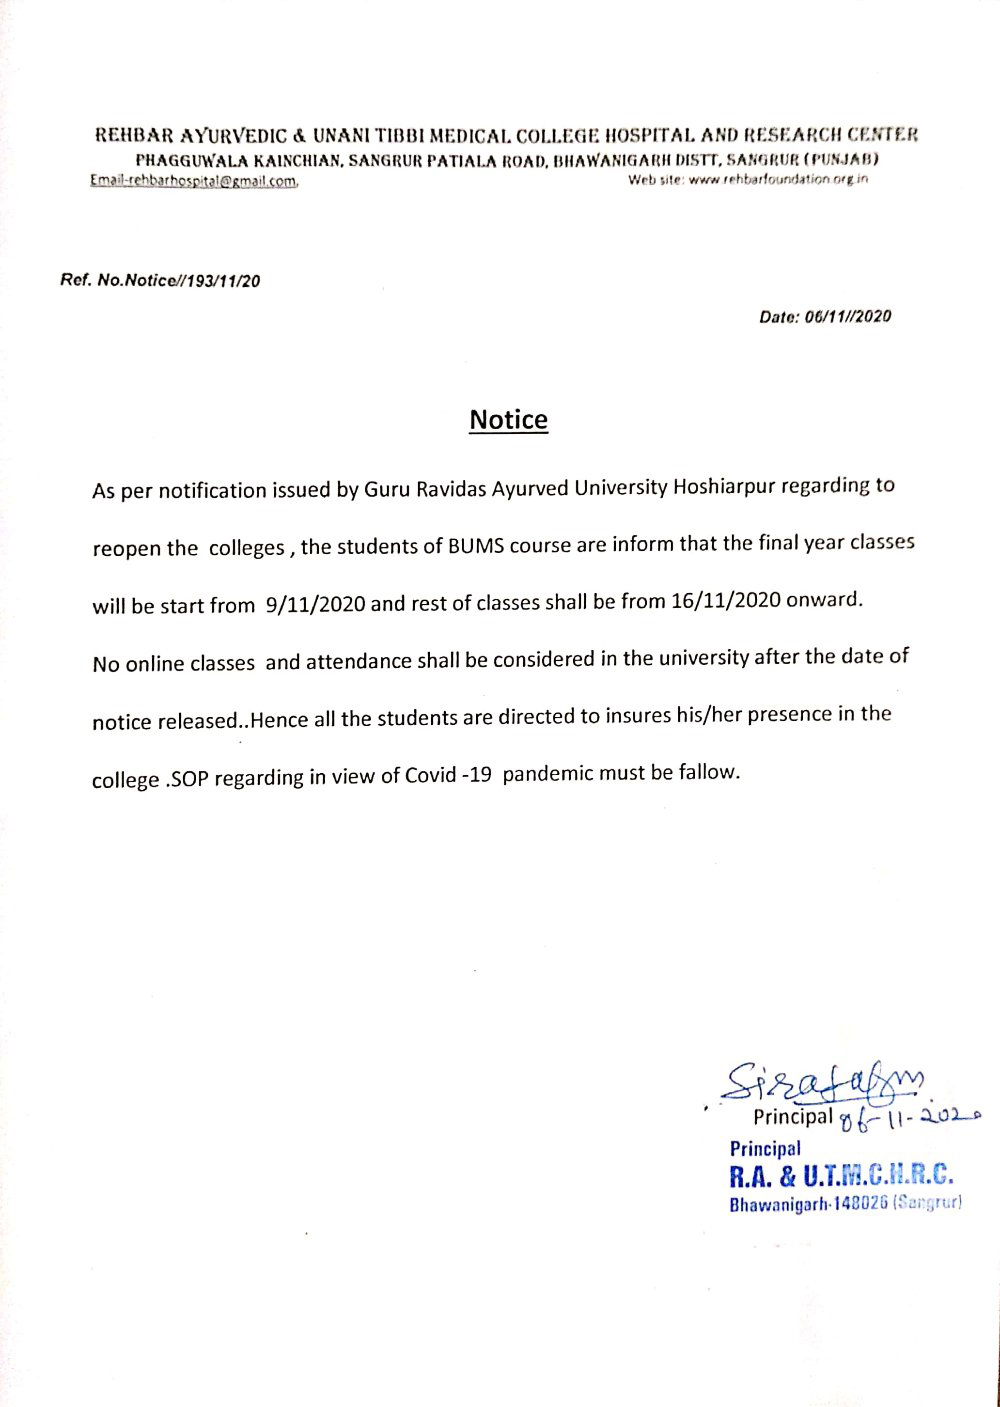 As per notification issued by Guru Ravidas Ayurved University Hoshiarpur regarding to reopen the colleges